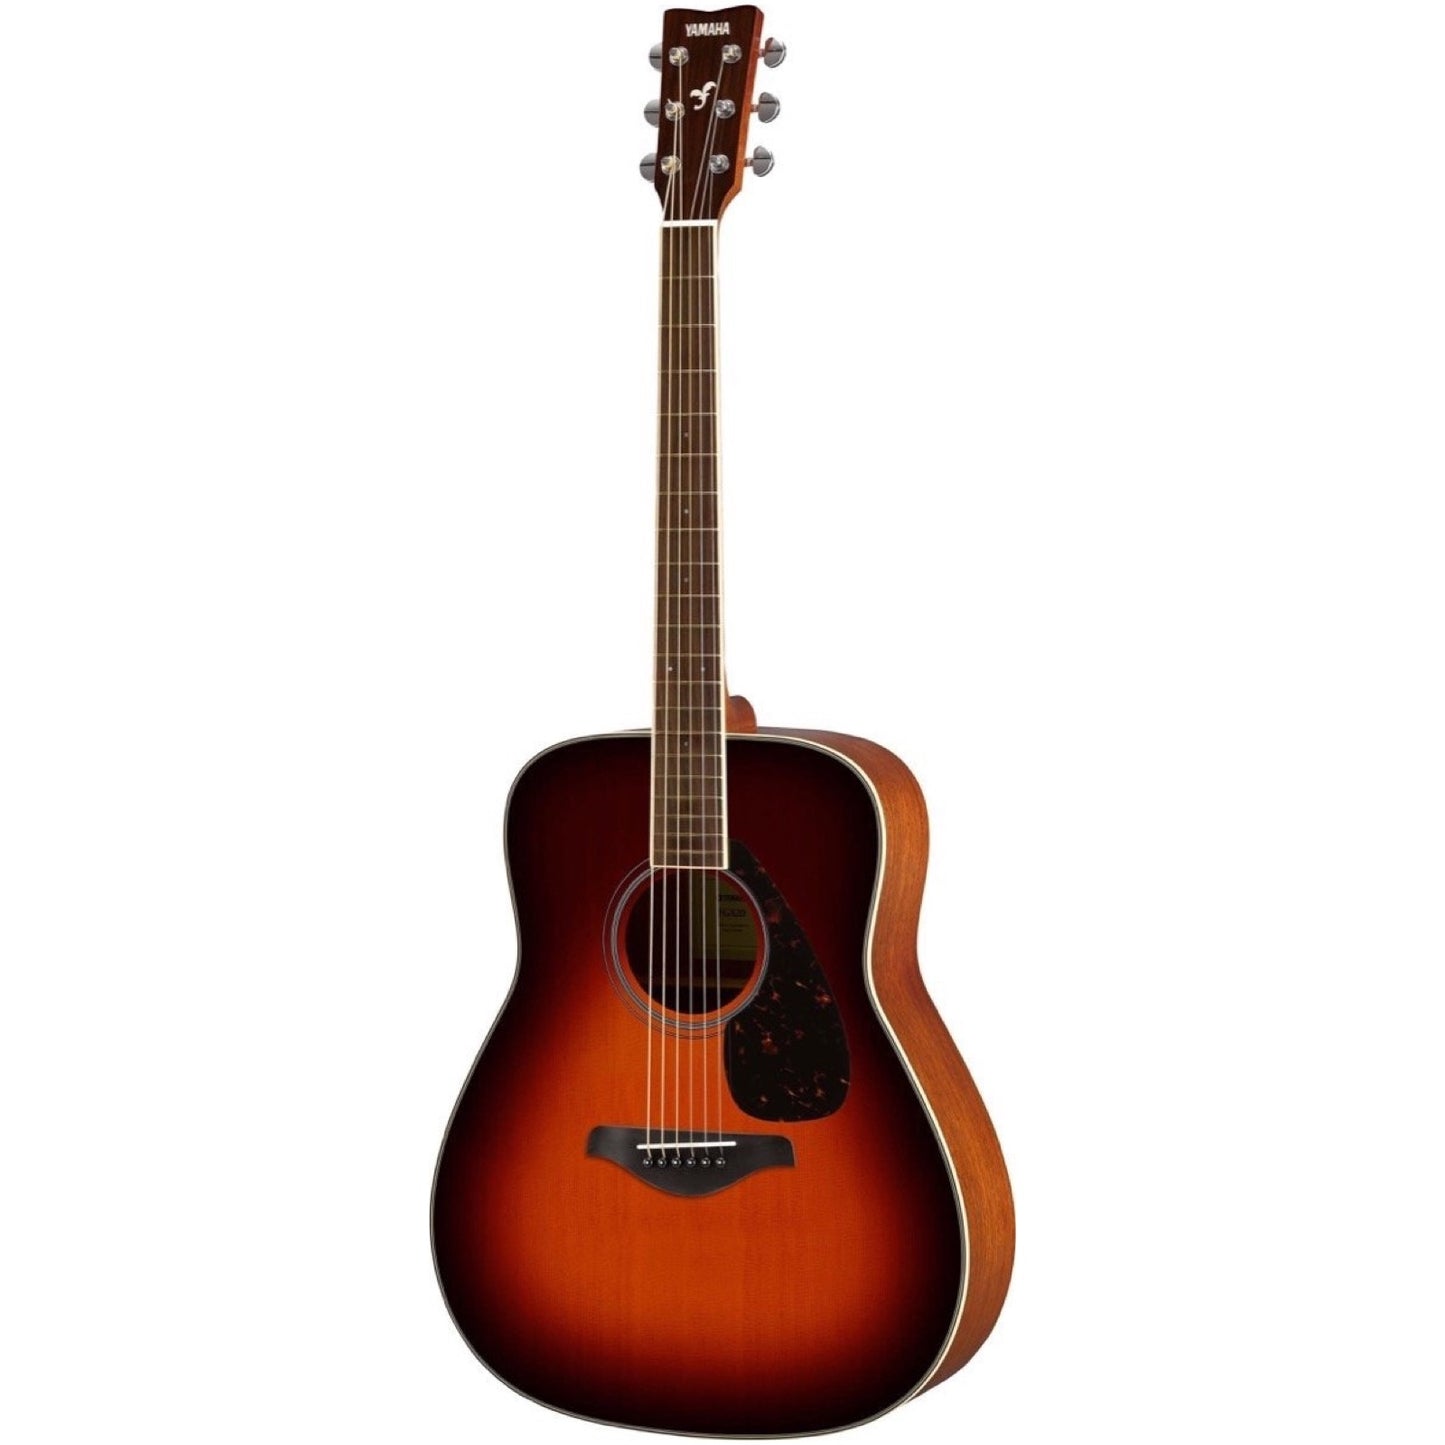 Yamaha FG820 Folk Acoustic Guitar, Natural